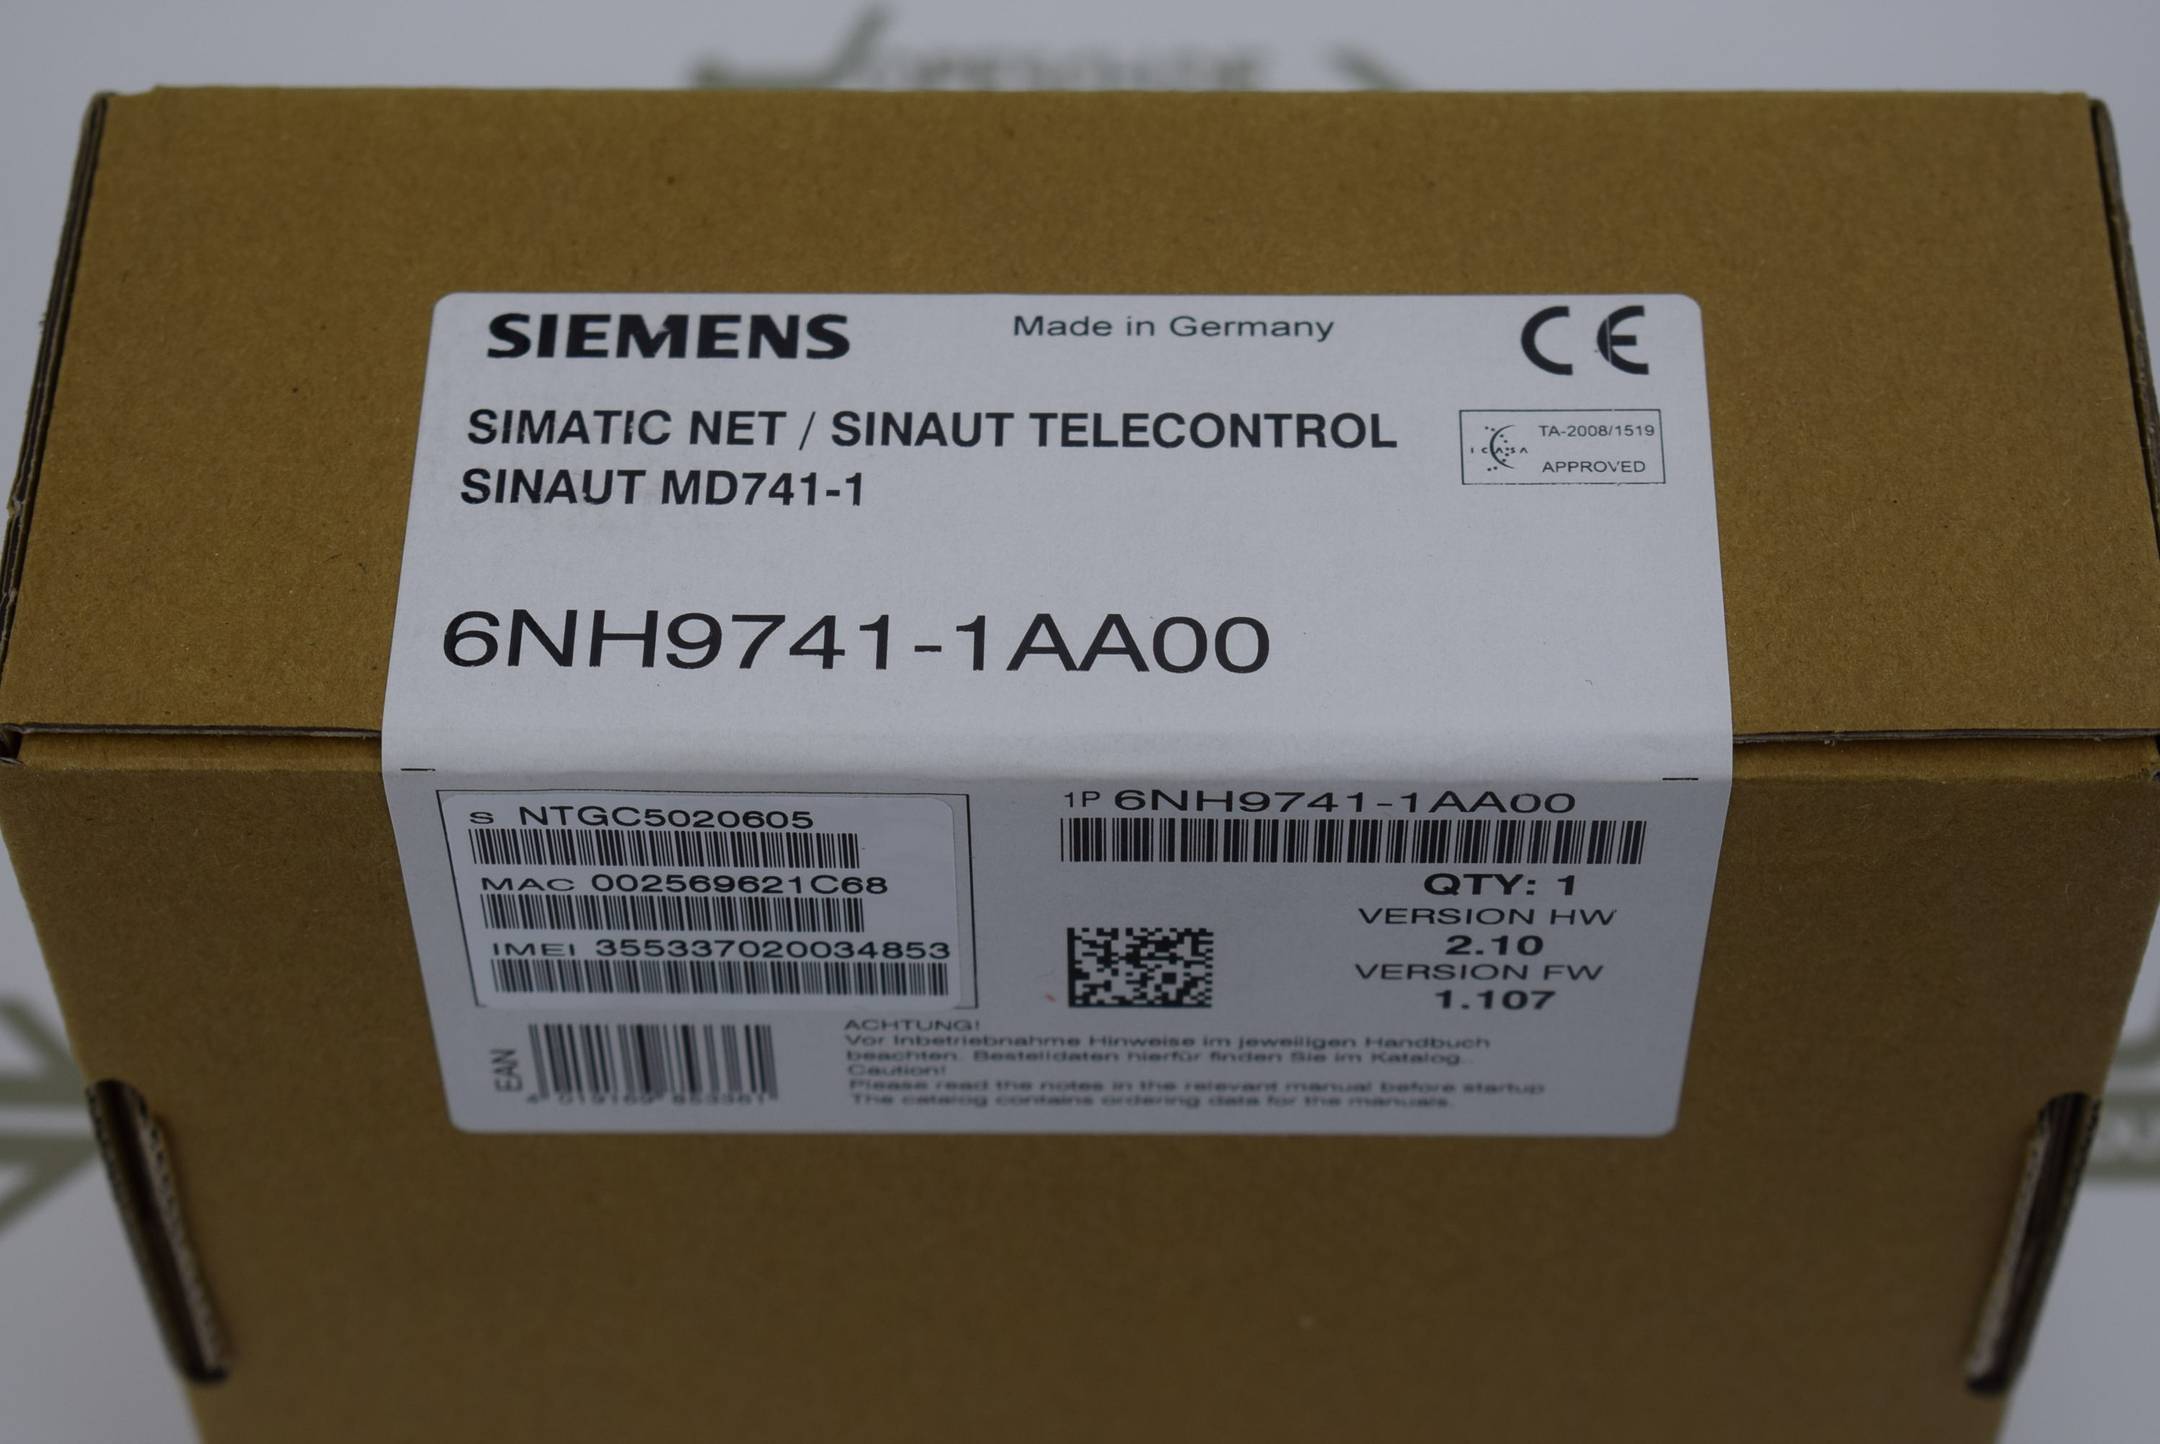 Siemens simatic Net / sinaut Telecontrol 6NH9741-1AA00 ( 6NH9 741-1AA00 ) MD741-1